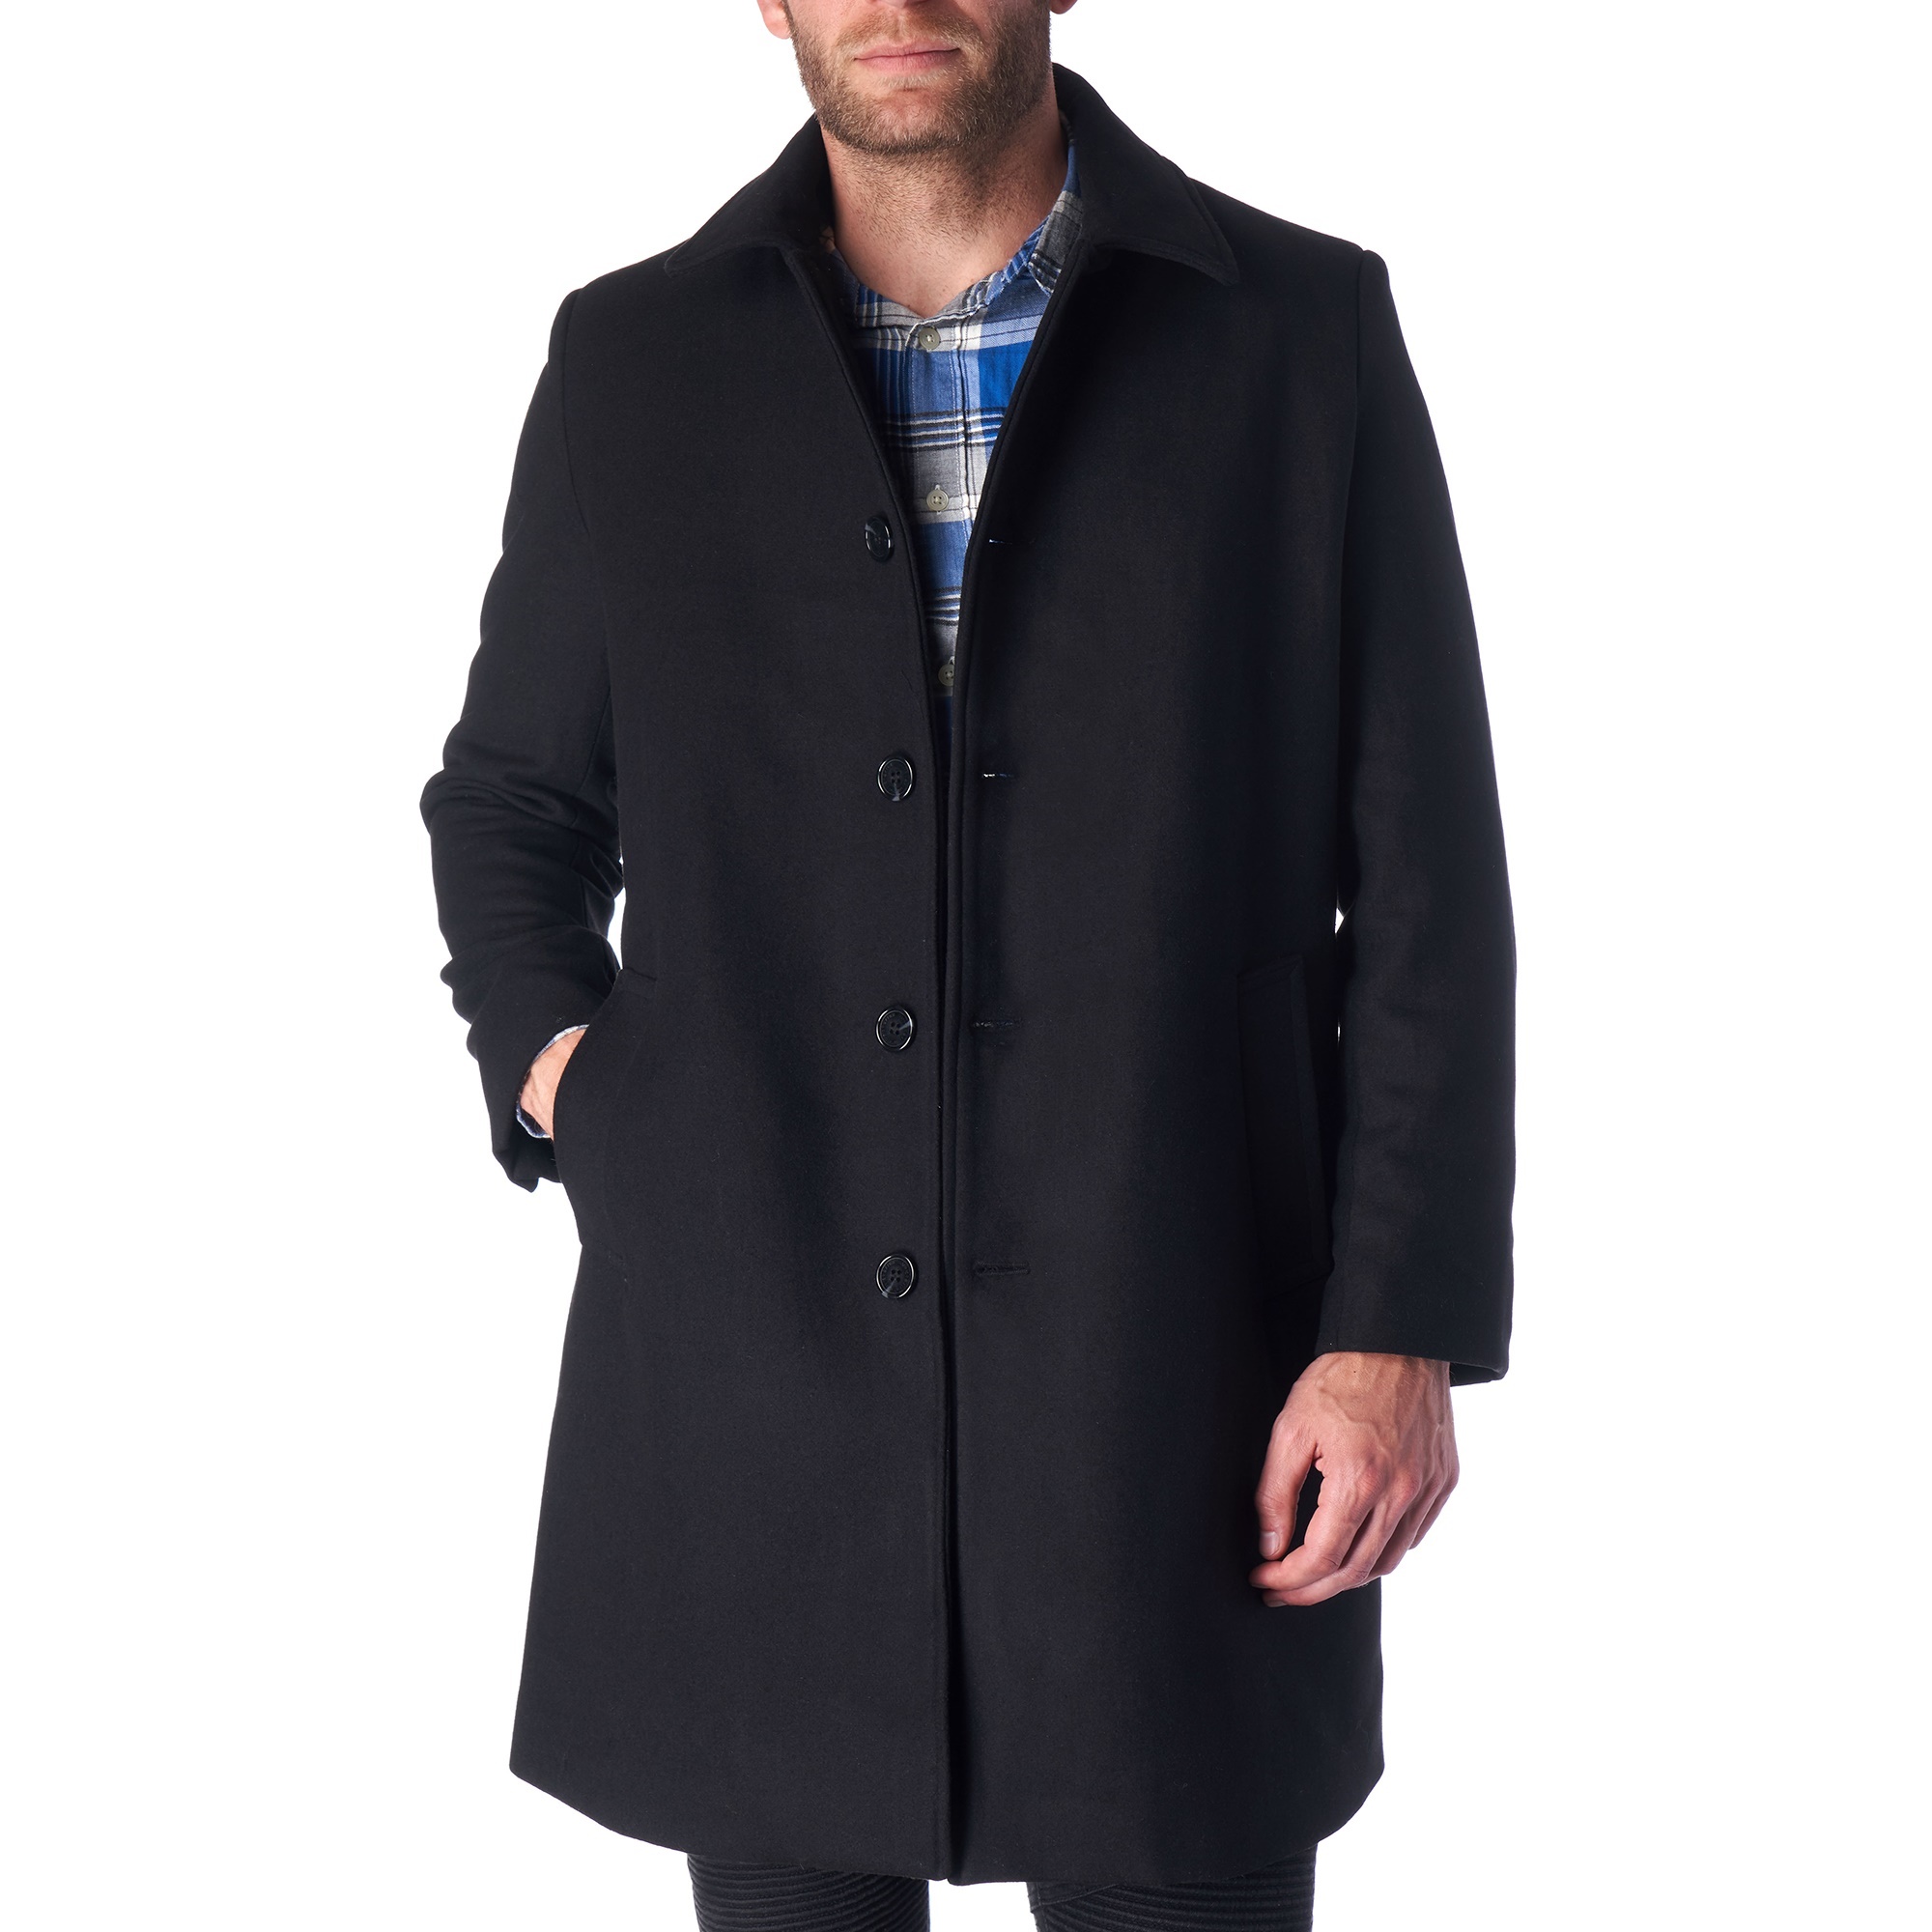 Hammer Anvil Mens Wool Blend Single Breasted Walking Coat Tailored Long Jacket - image 1 of 7